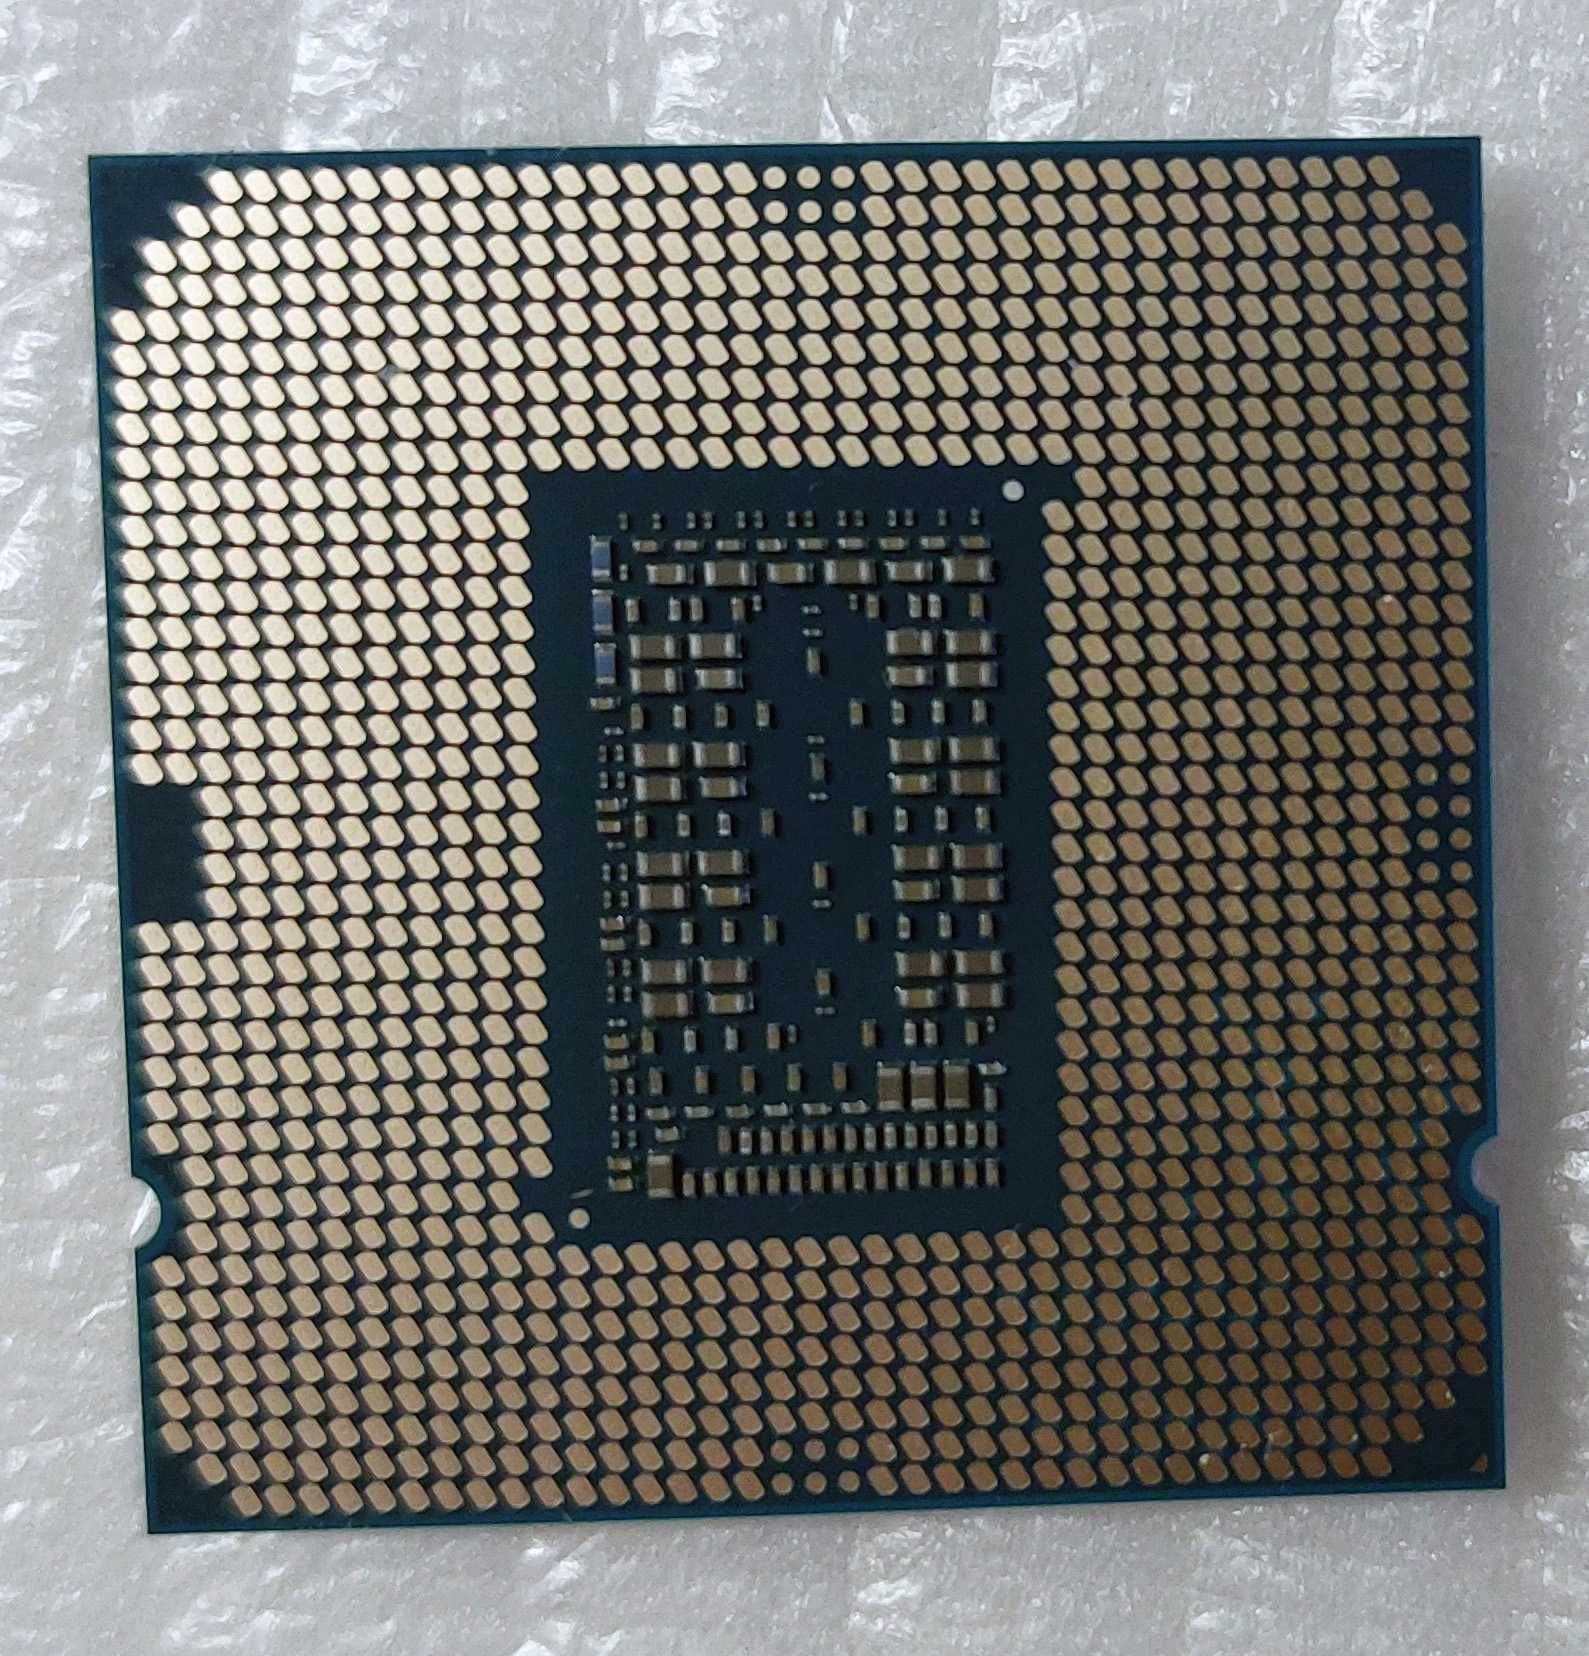 Procesor Intel Core i9-11900KF